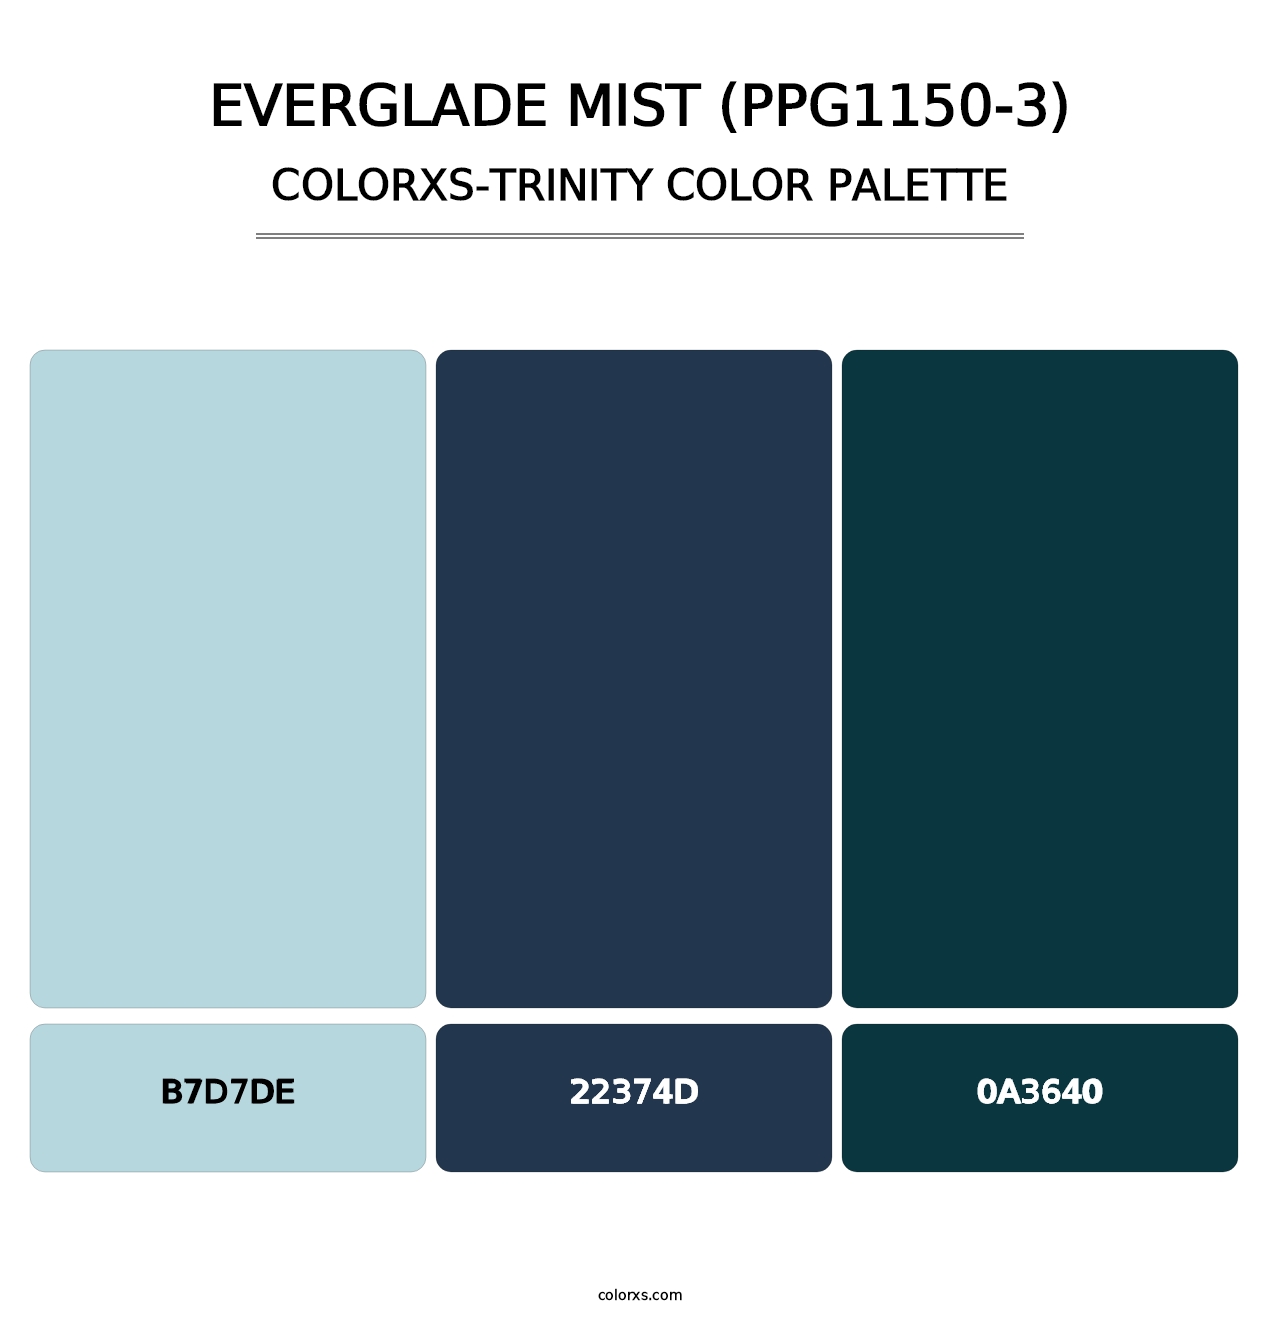 Everglade Mist (PPG1150-3) - Colorxs Trinity Palette